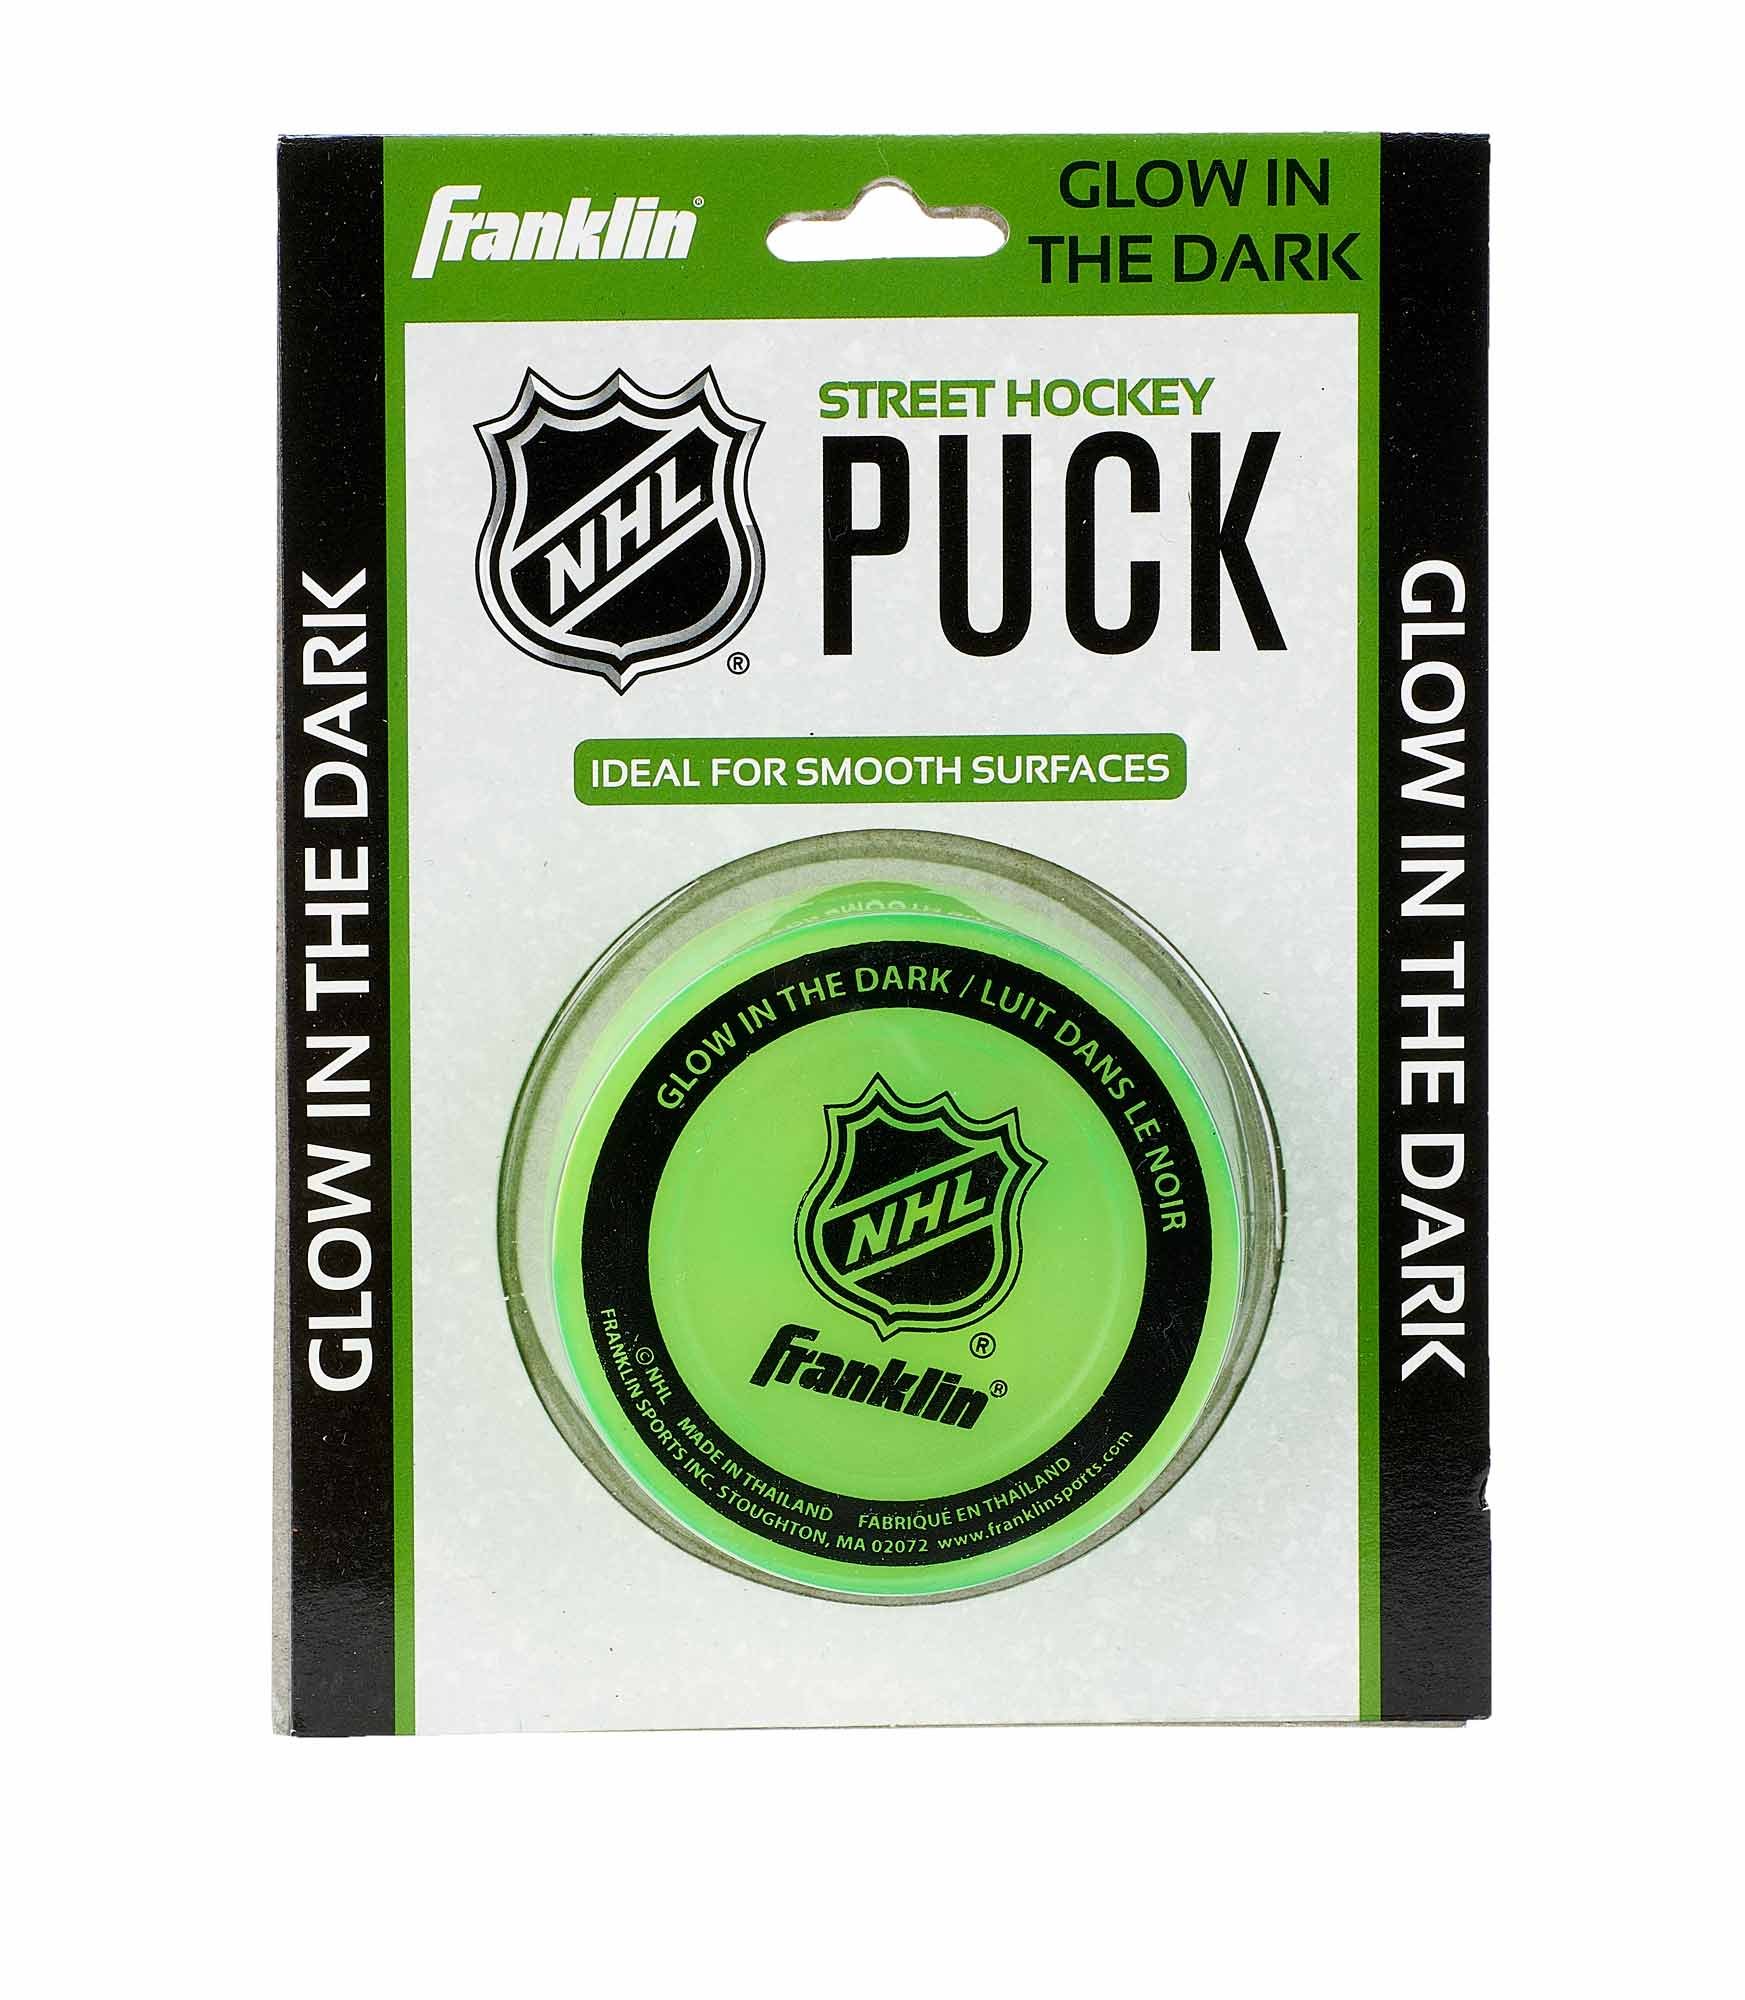 Franklin "Streethockey Puck", Glow in the dark, 12226